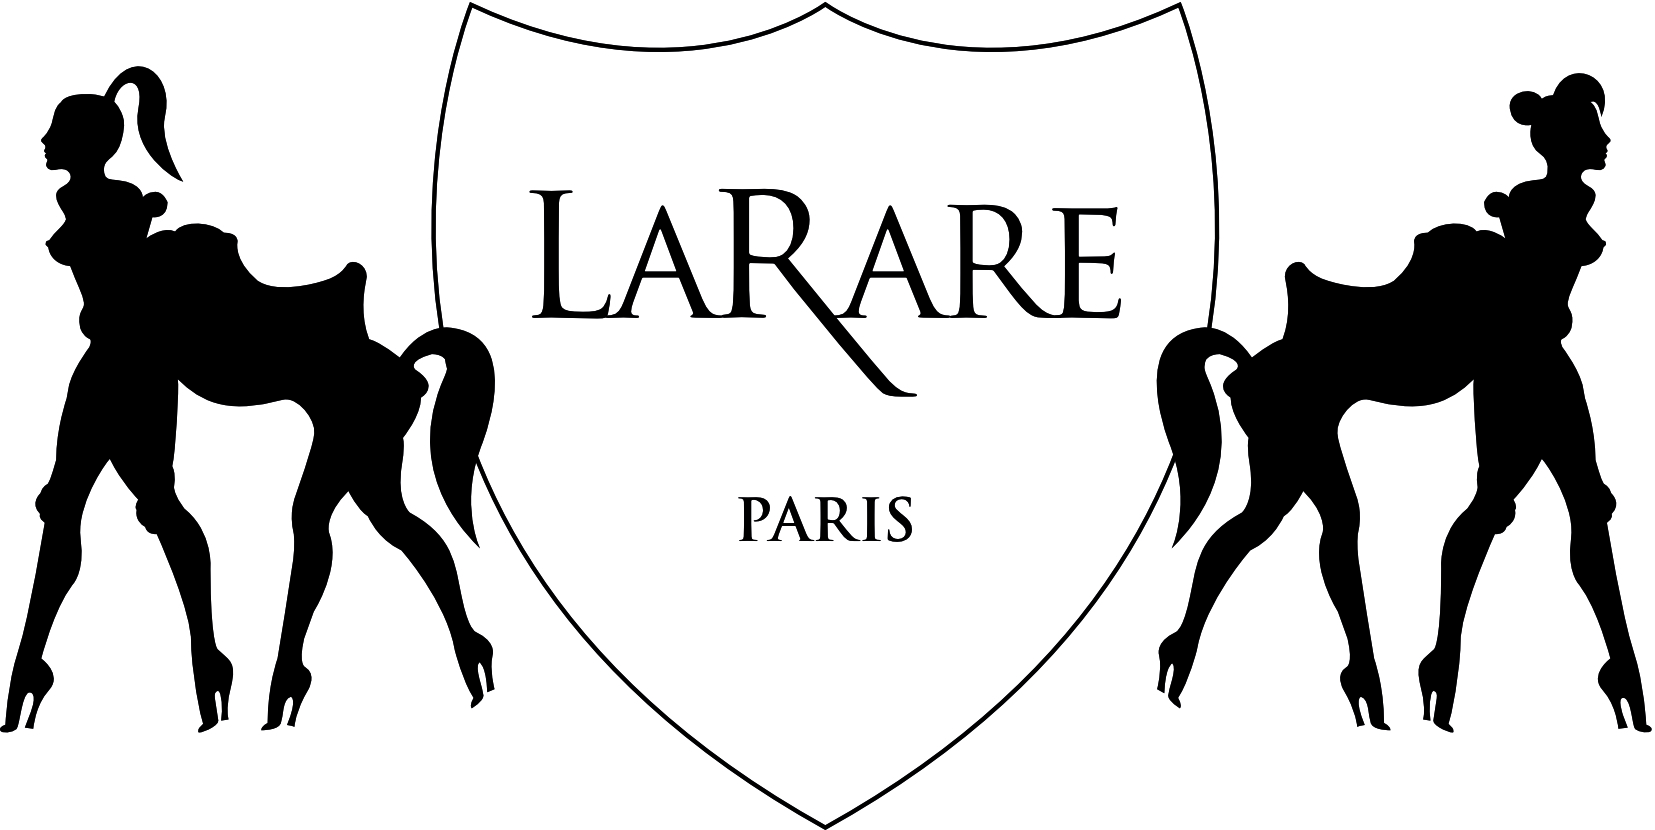 Maison Larare_logo larare_Nathalie Elharrar